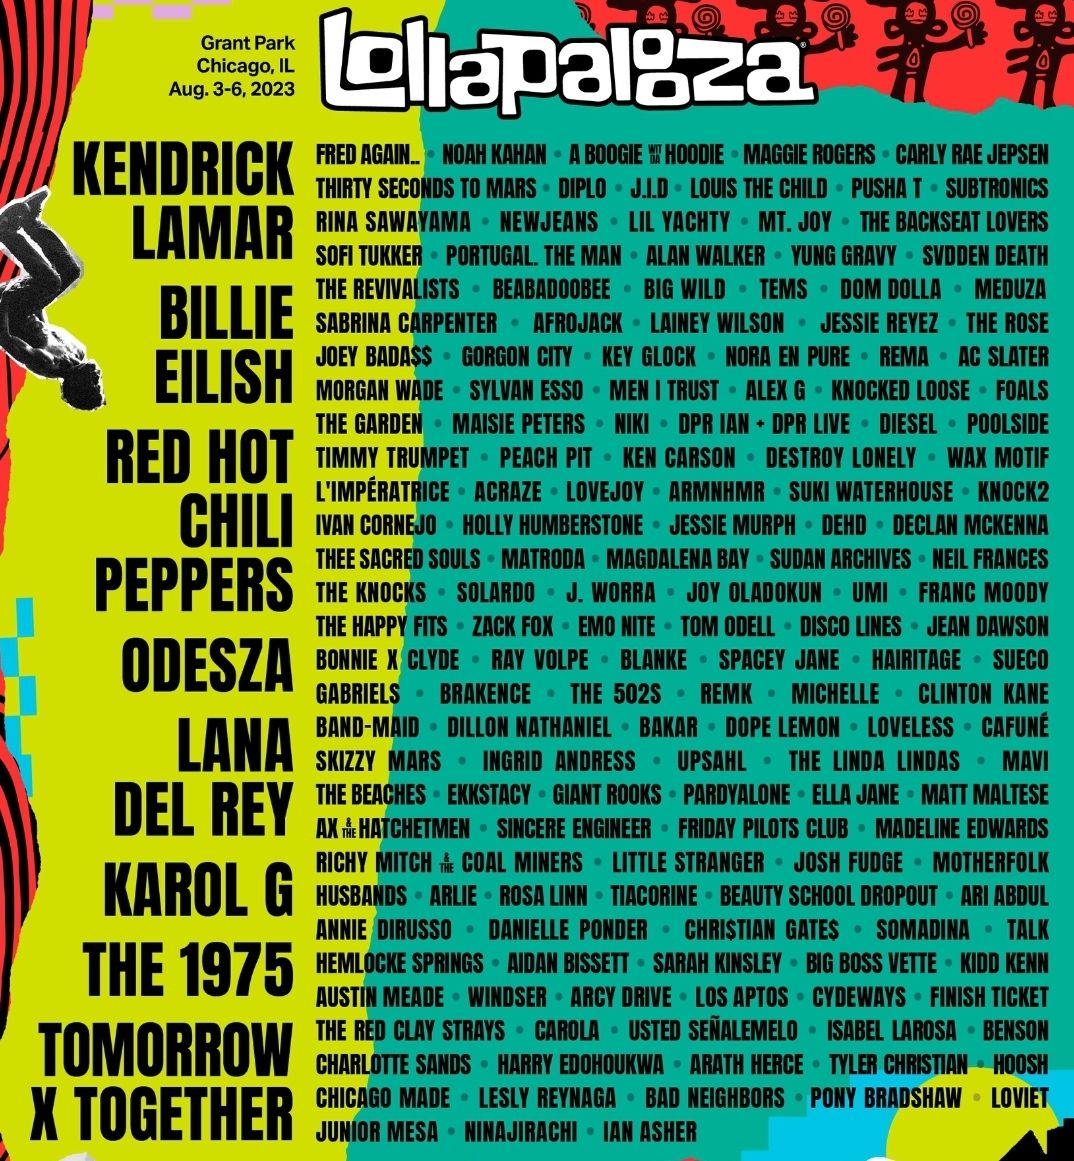 TXT Jadi Headline Lollapalooza 2023 Bersama Kendrick Lamar, Billie Eilish, Red Hot Chili Peppers, dan Karol G/